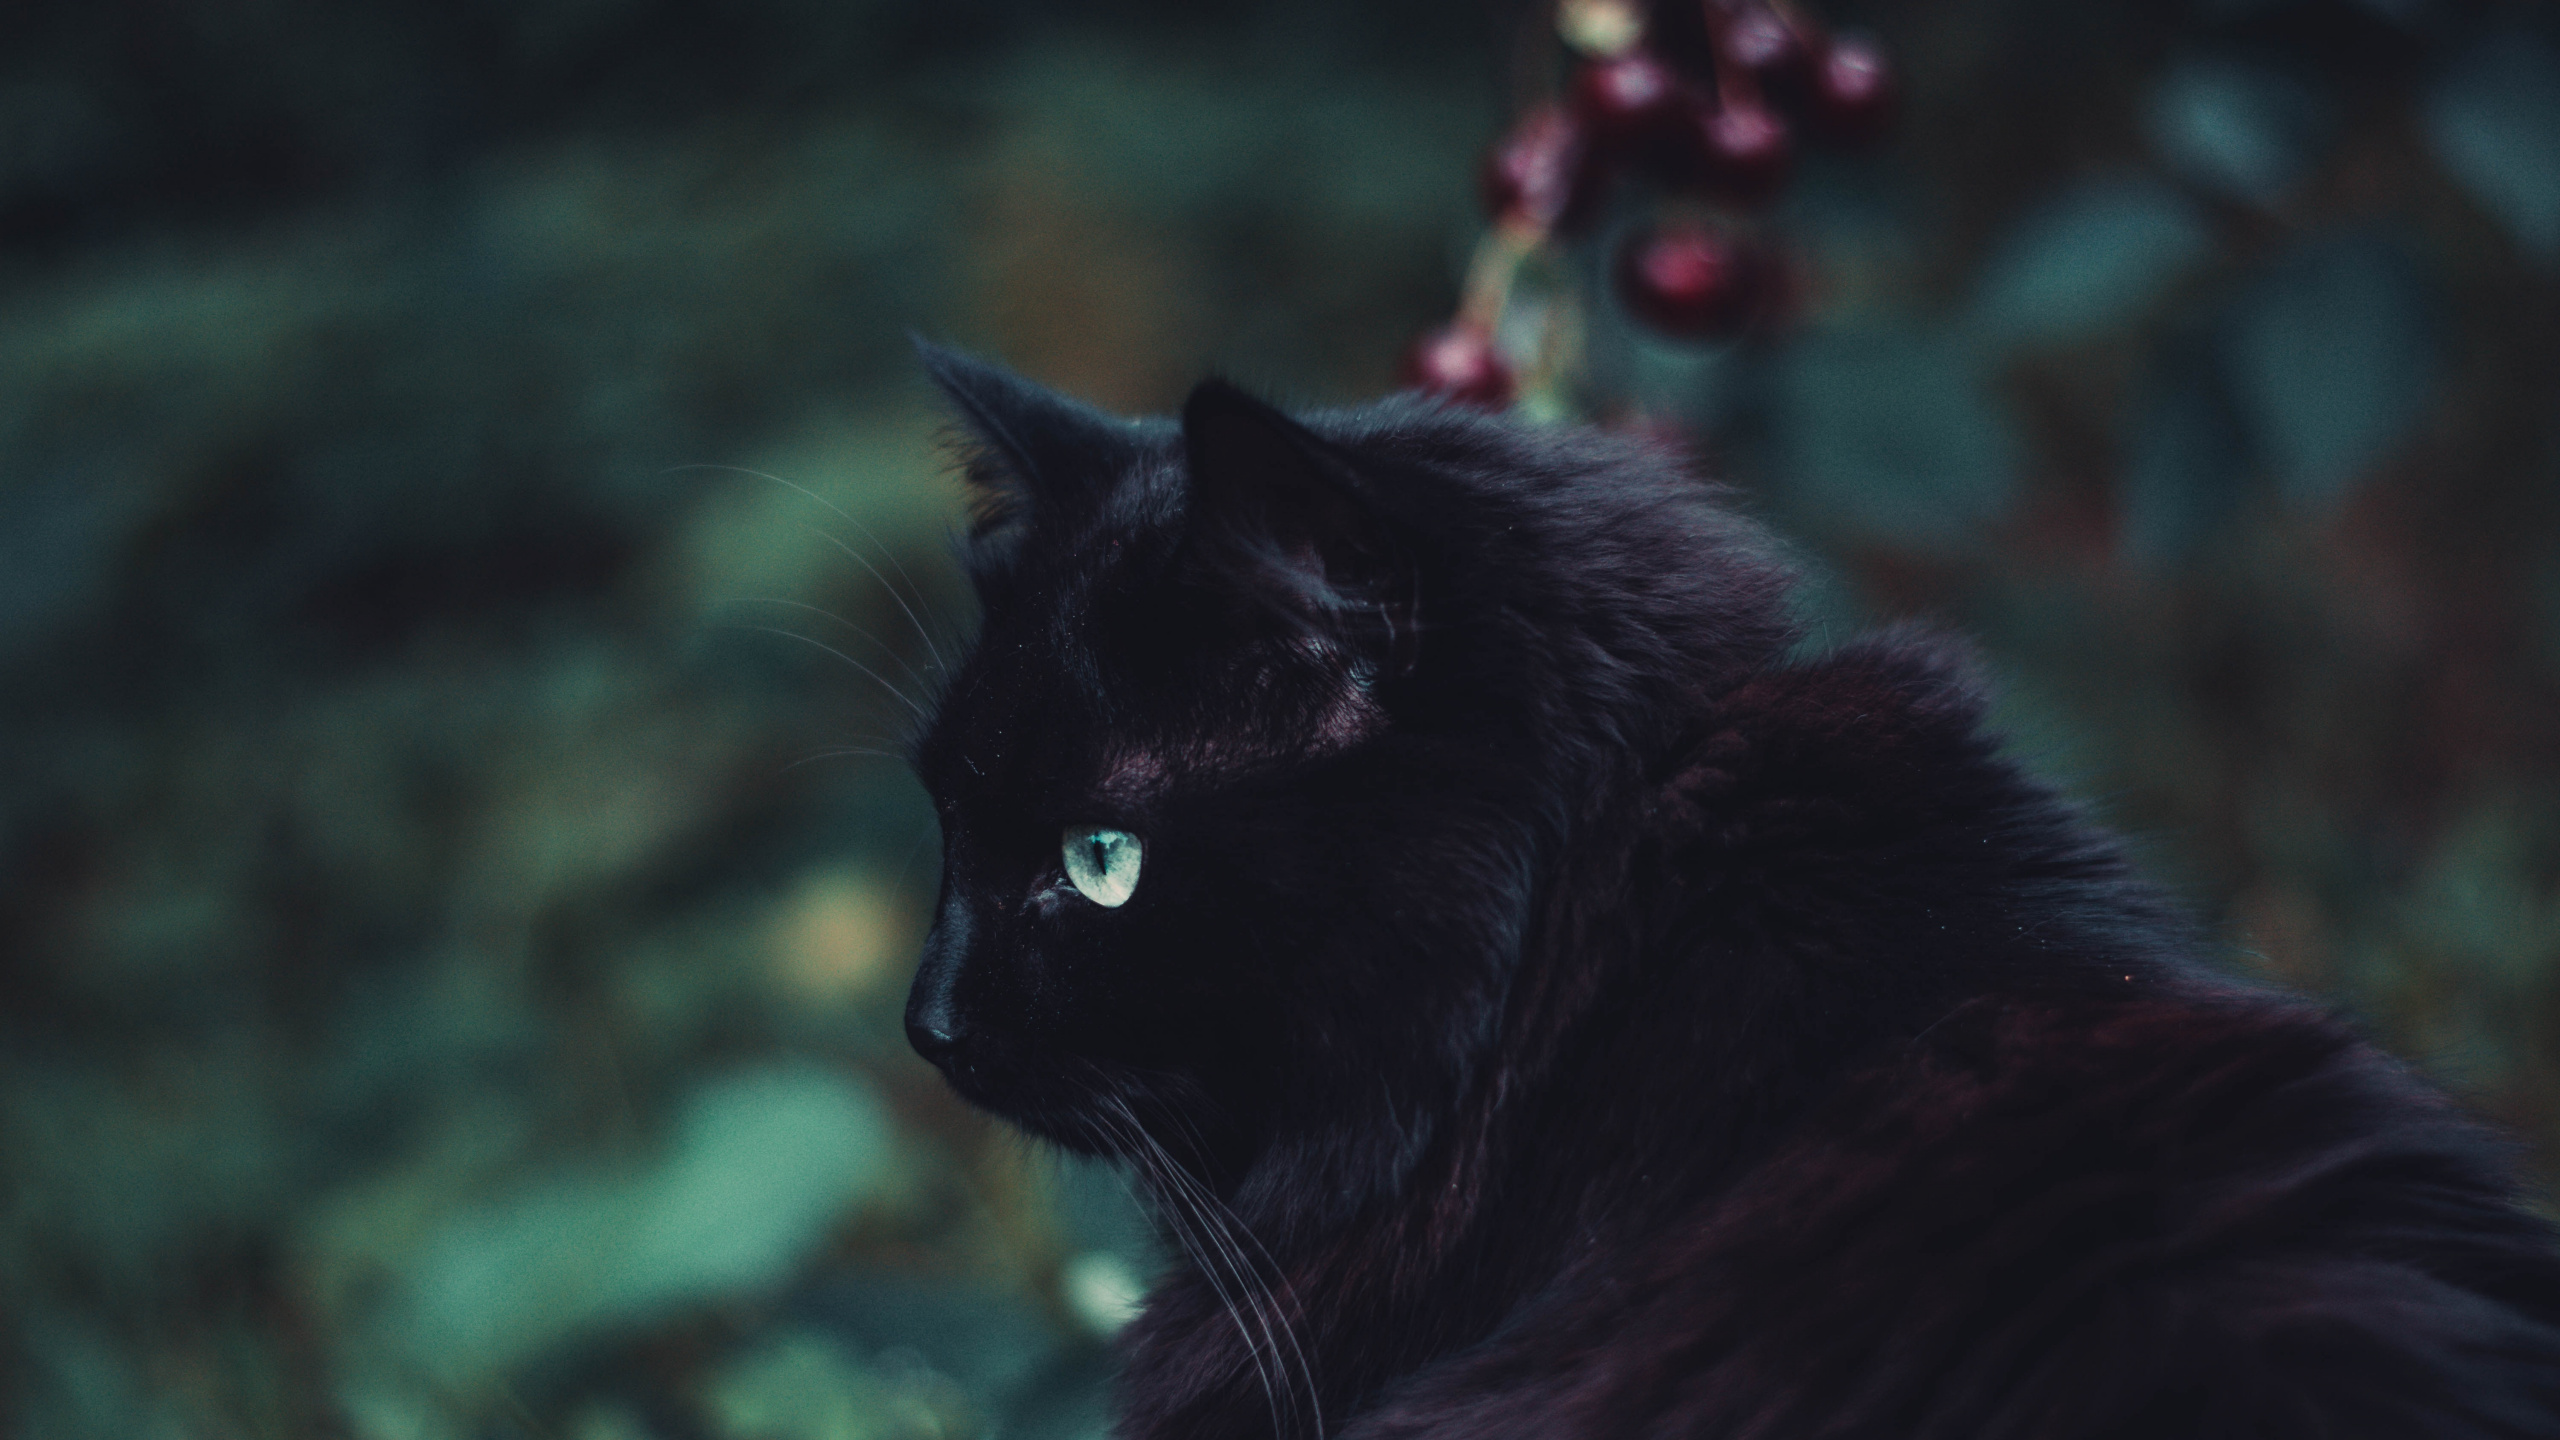 Black Cat on Green Grass. Wallpaper in 2560x1440 Resolution